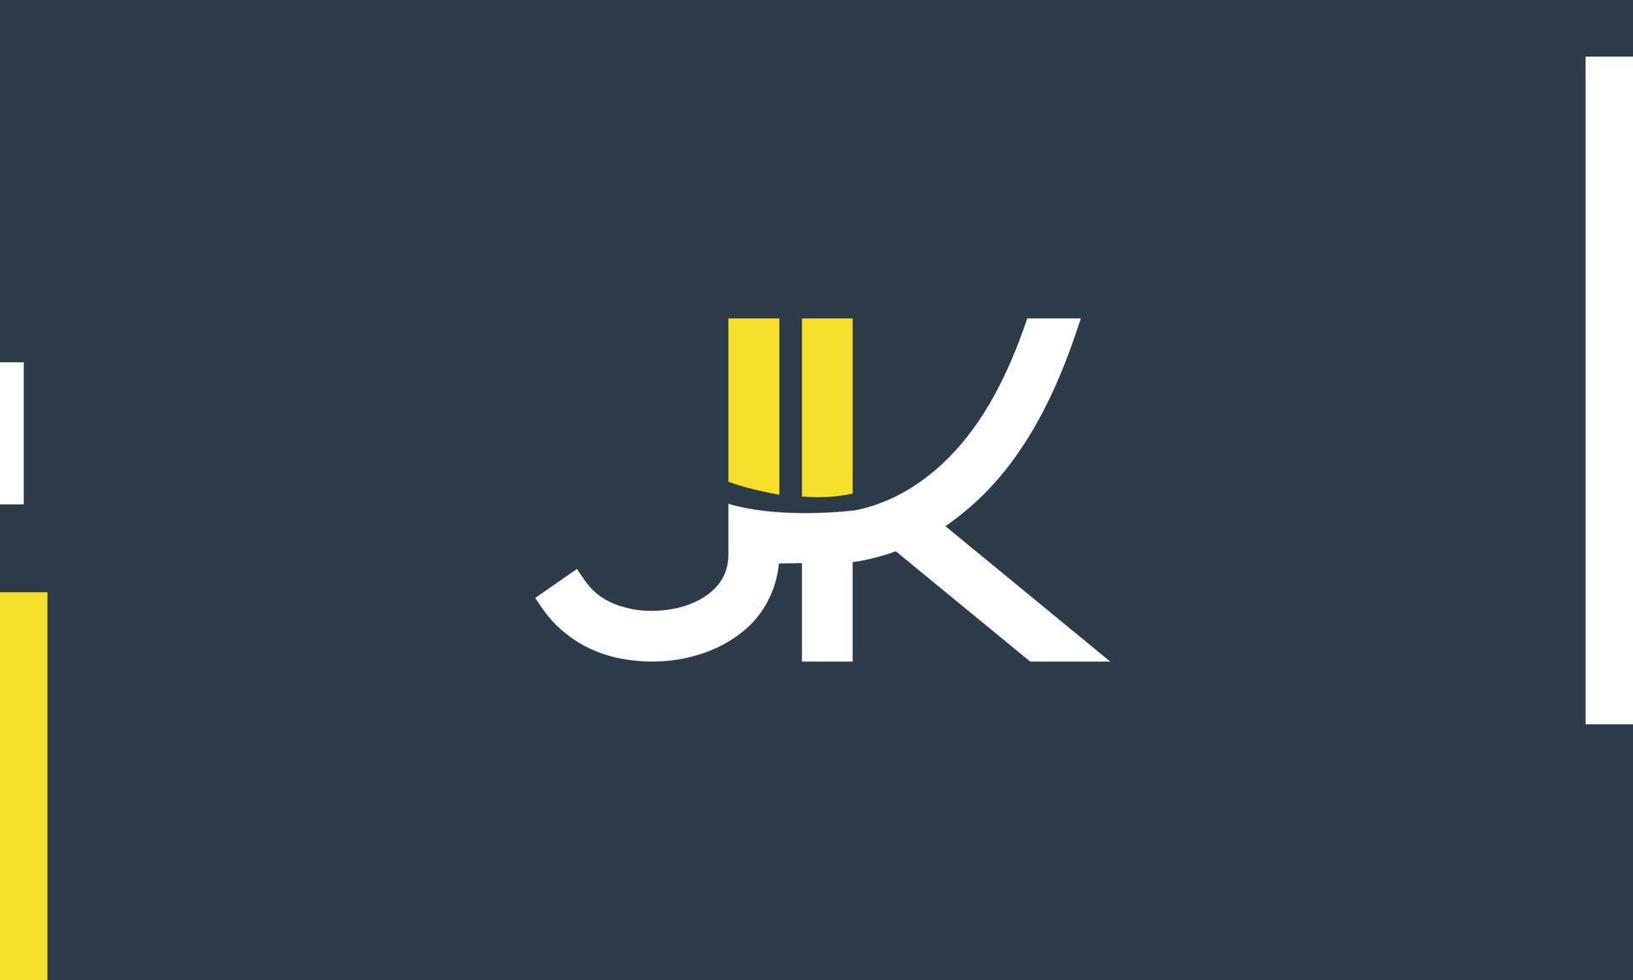 alfabet letters initialen monogram logo jk, kj, j en k vector